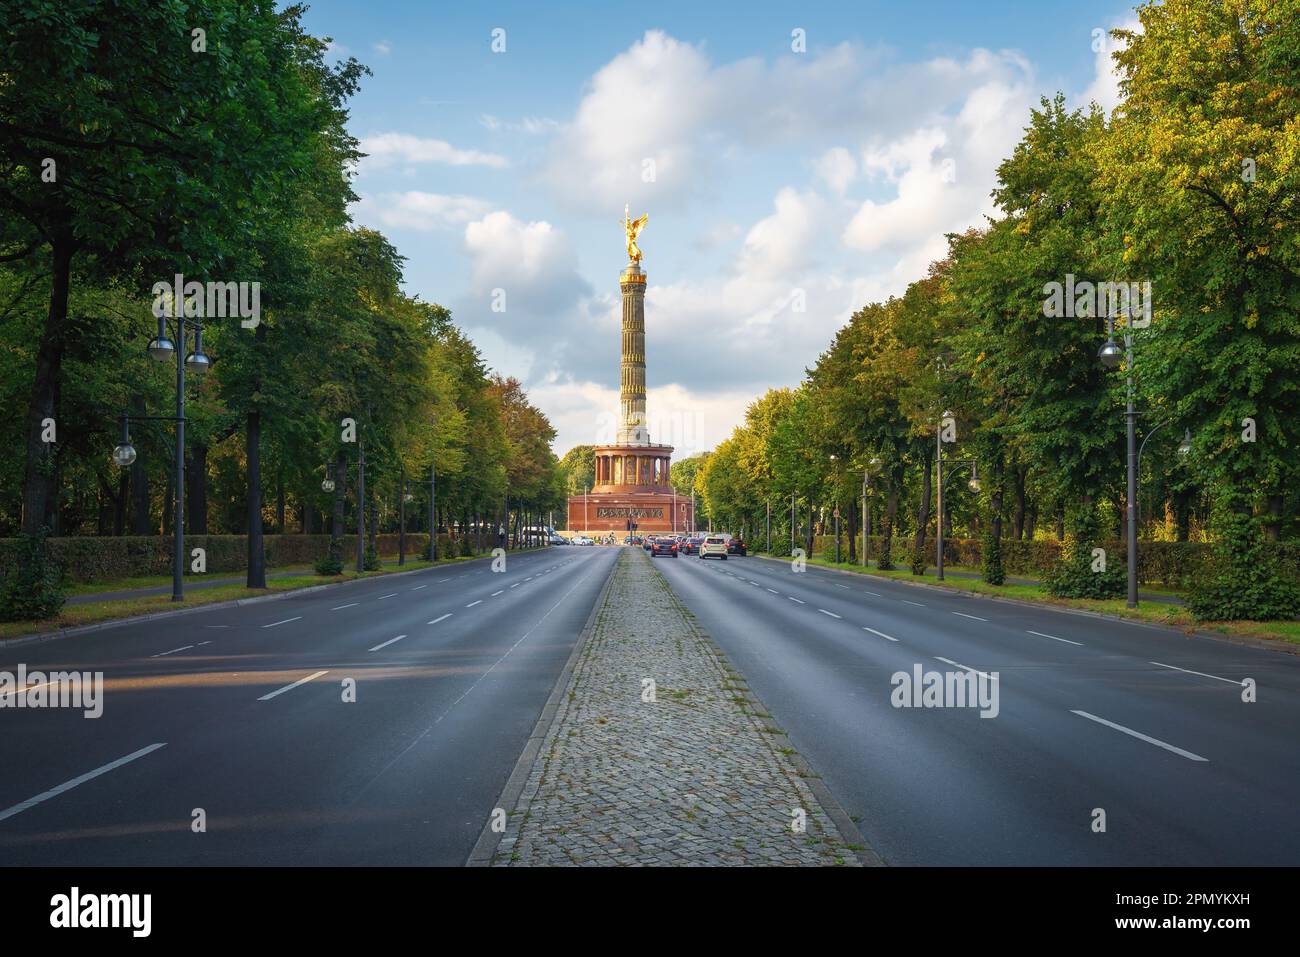 Victory Column (Siegessaule), Tiergarten Park and Bundesstrasse 2 highway  - Berlin, Germany Stock Photo